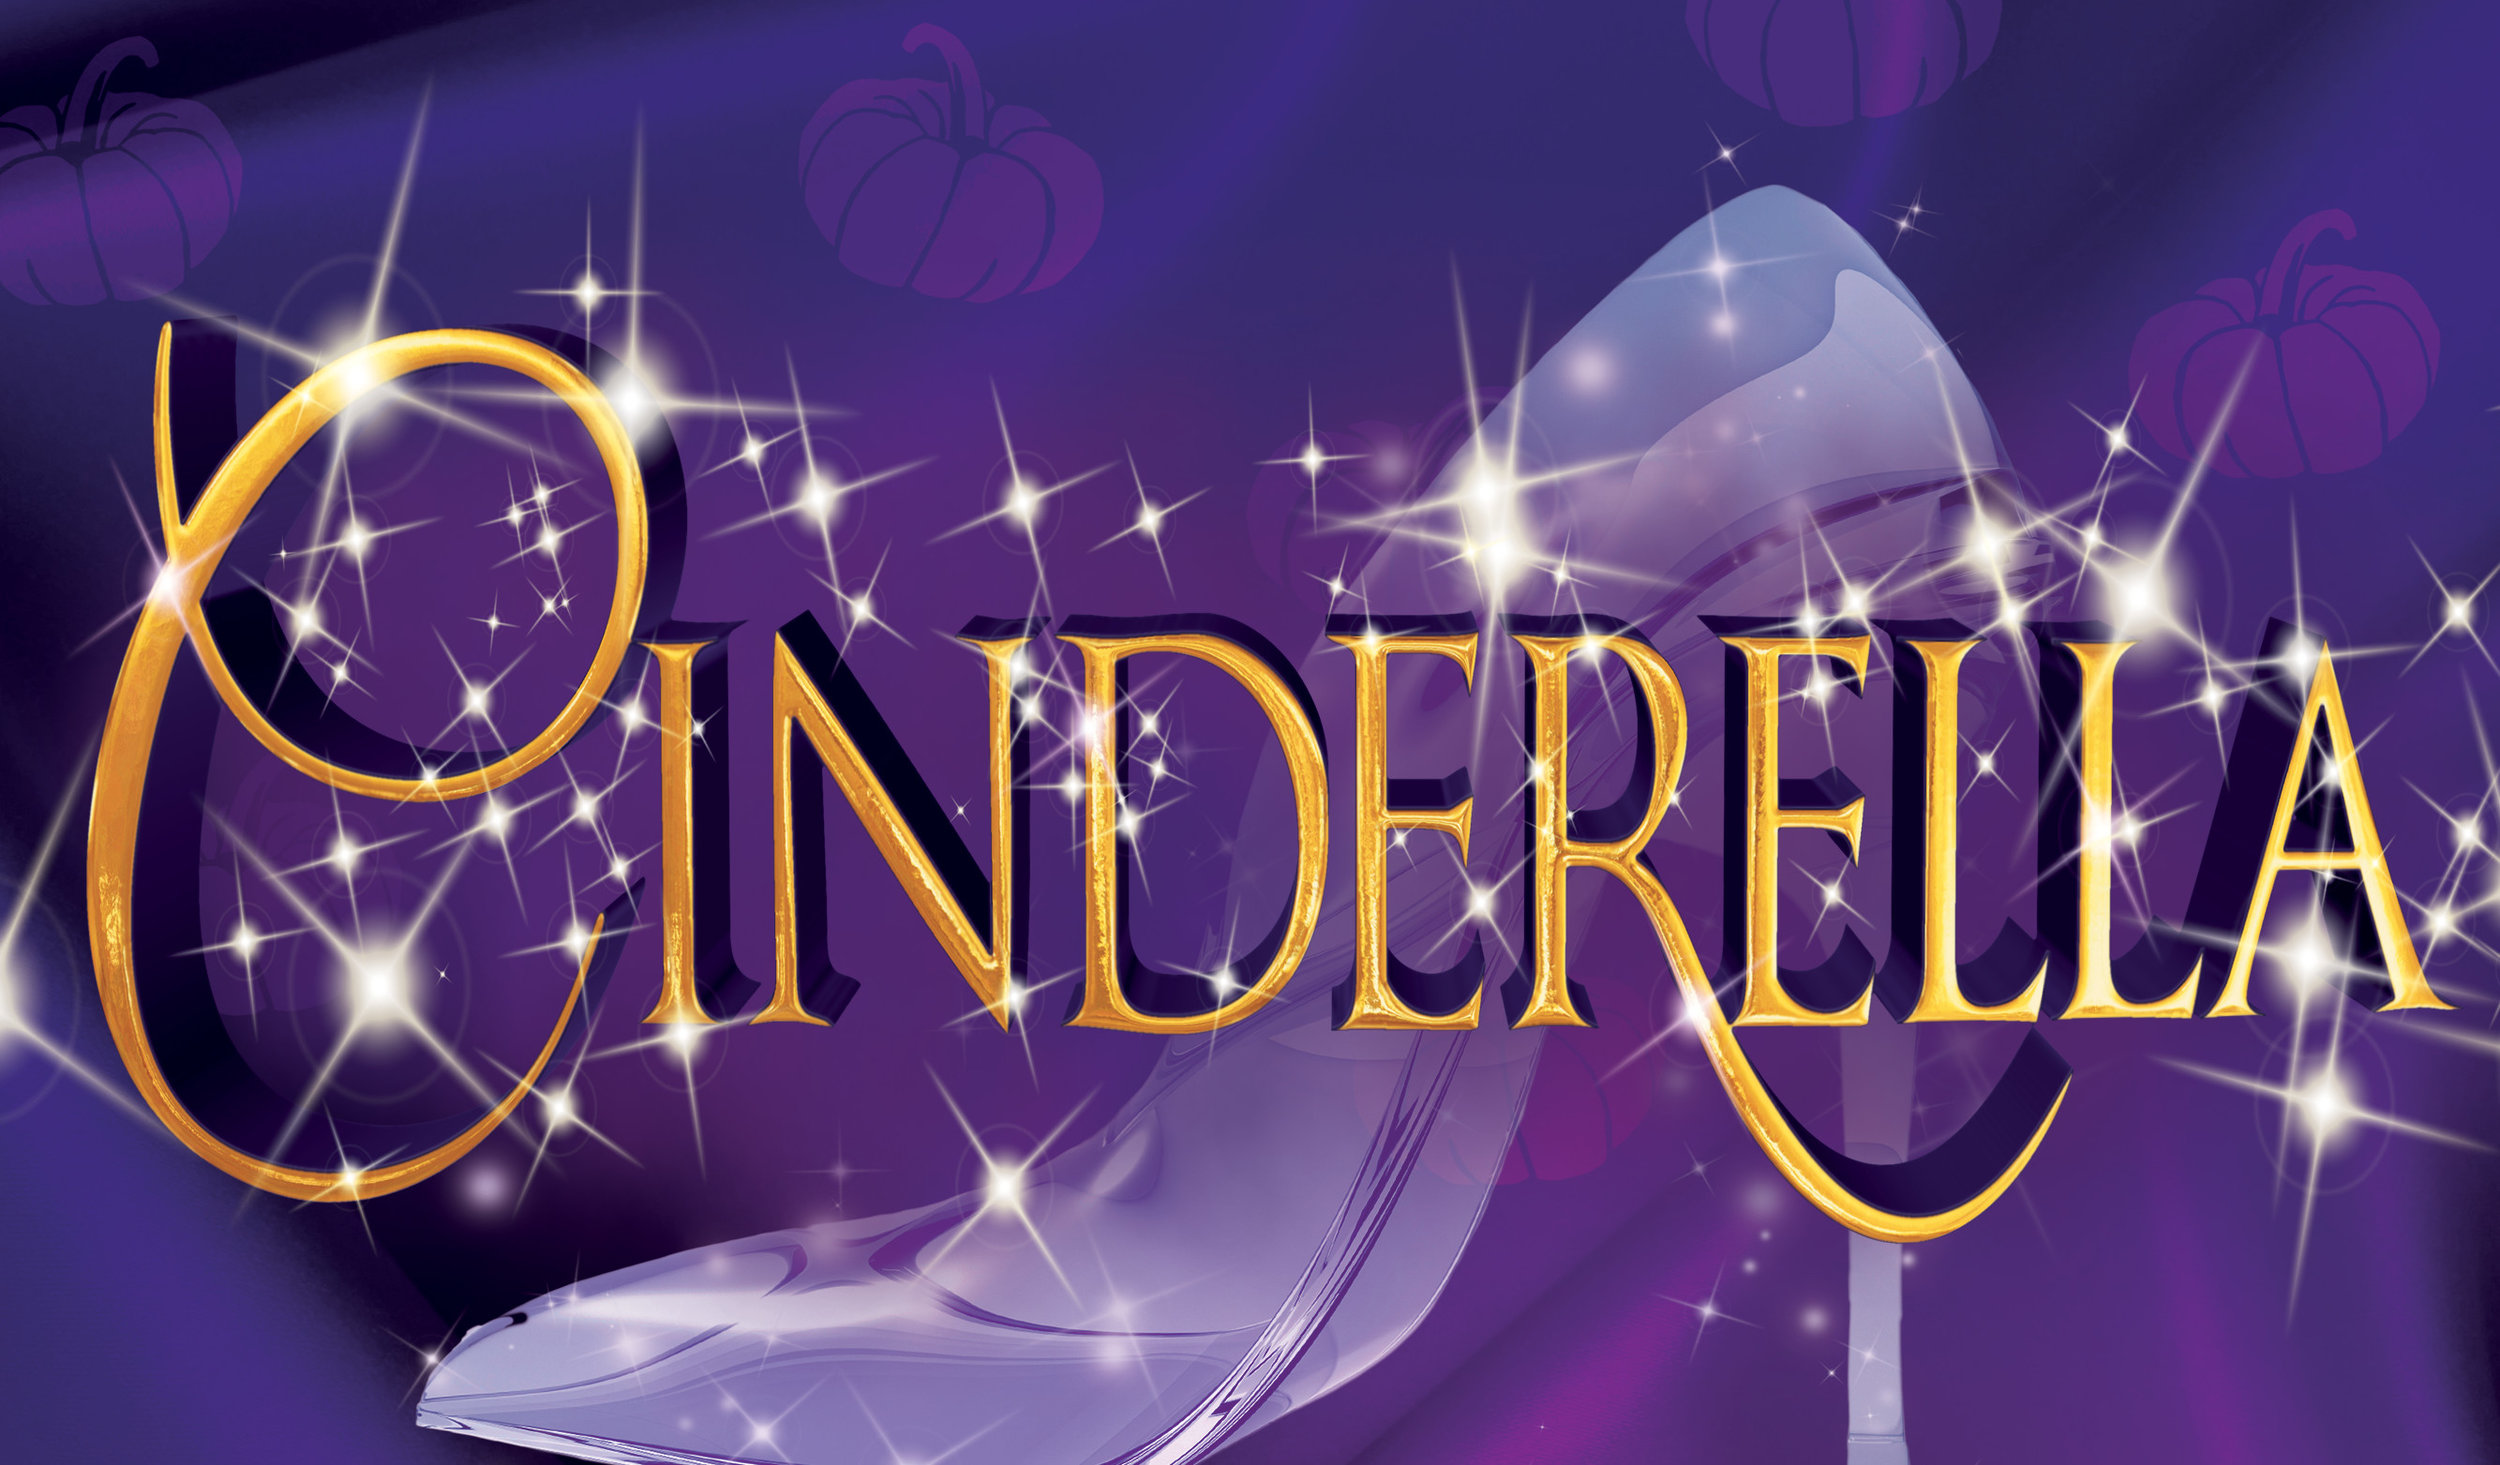 Cinderella logo.jpg